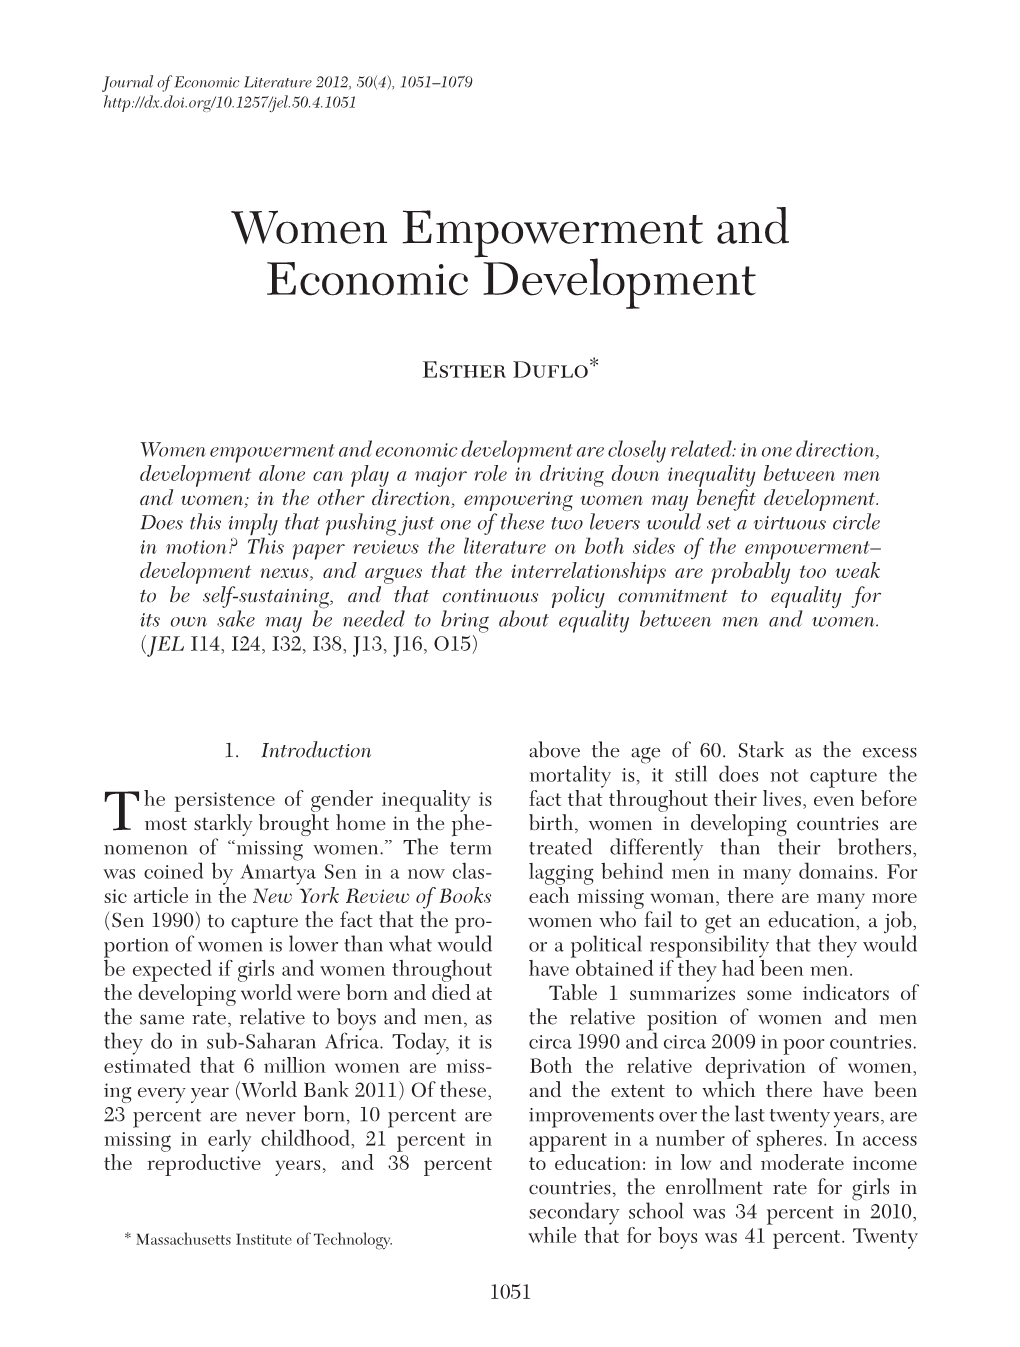 Women Empowerment and Economic Development